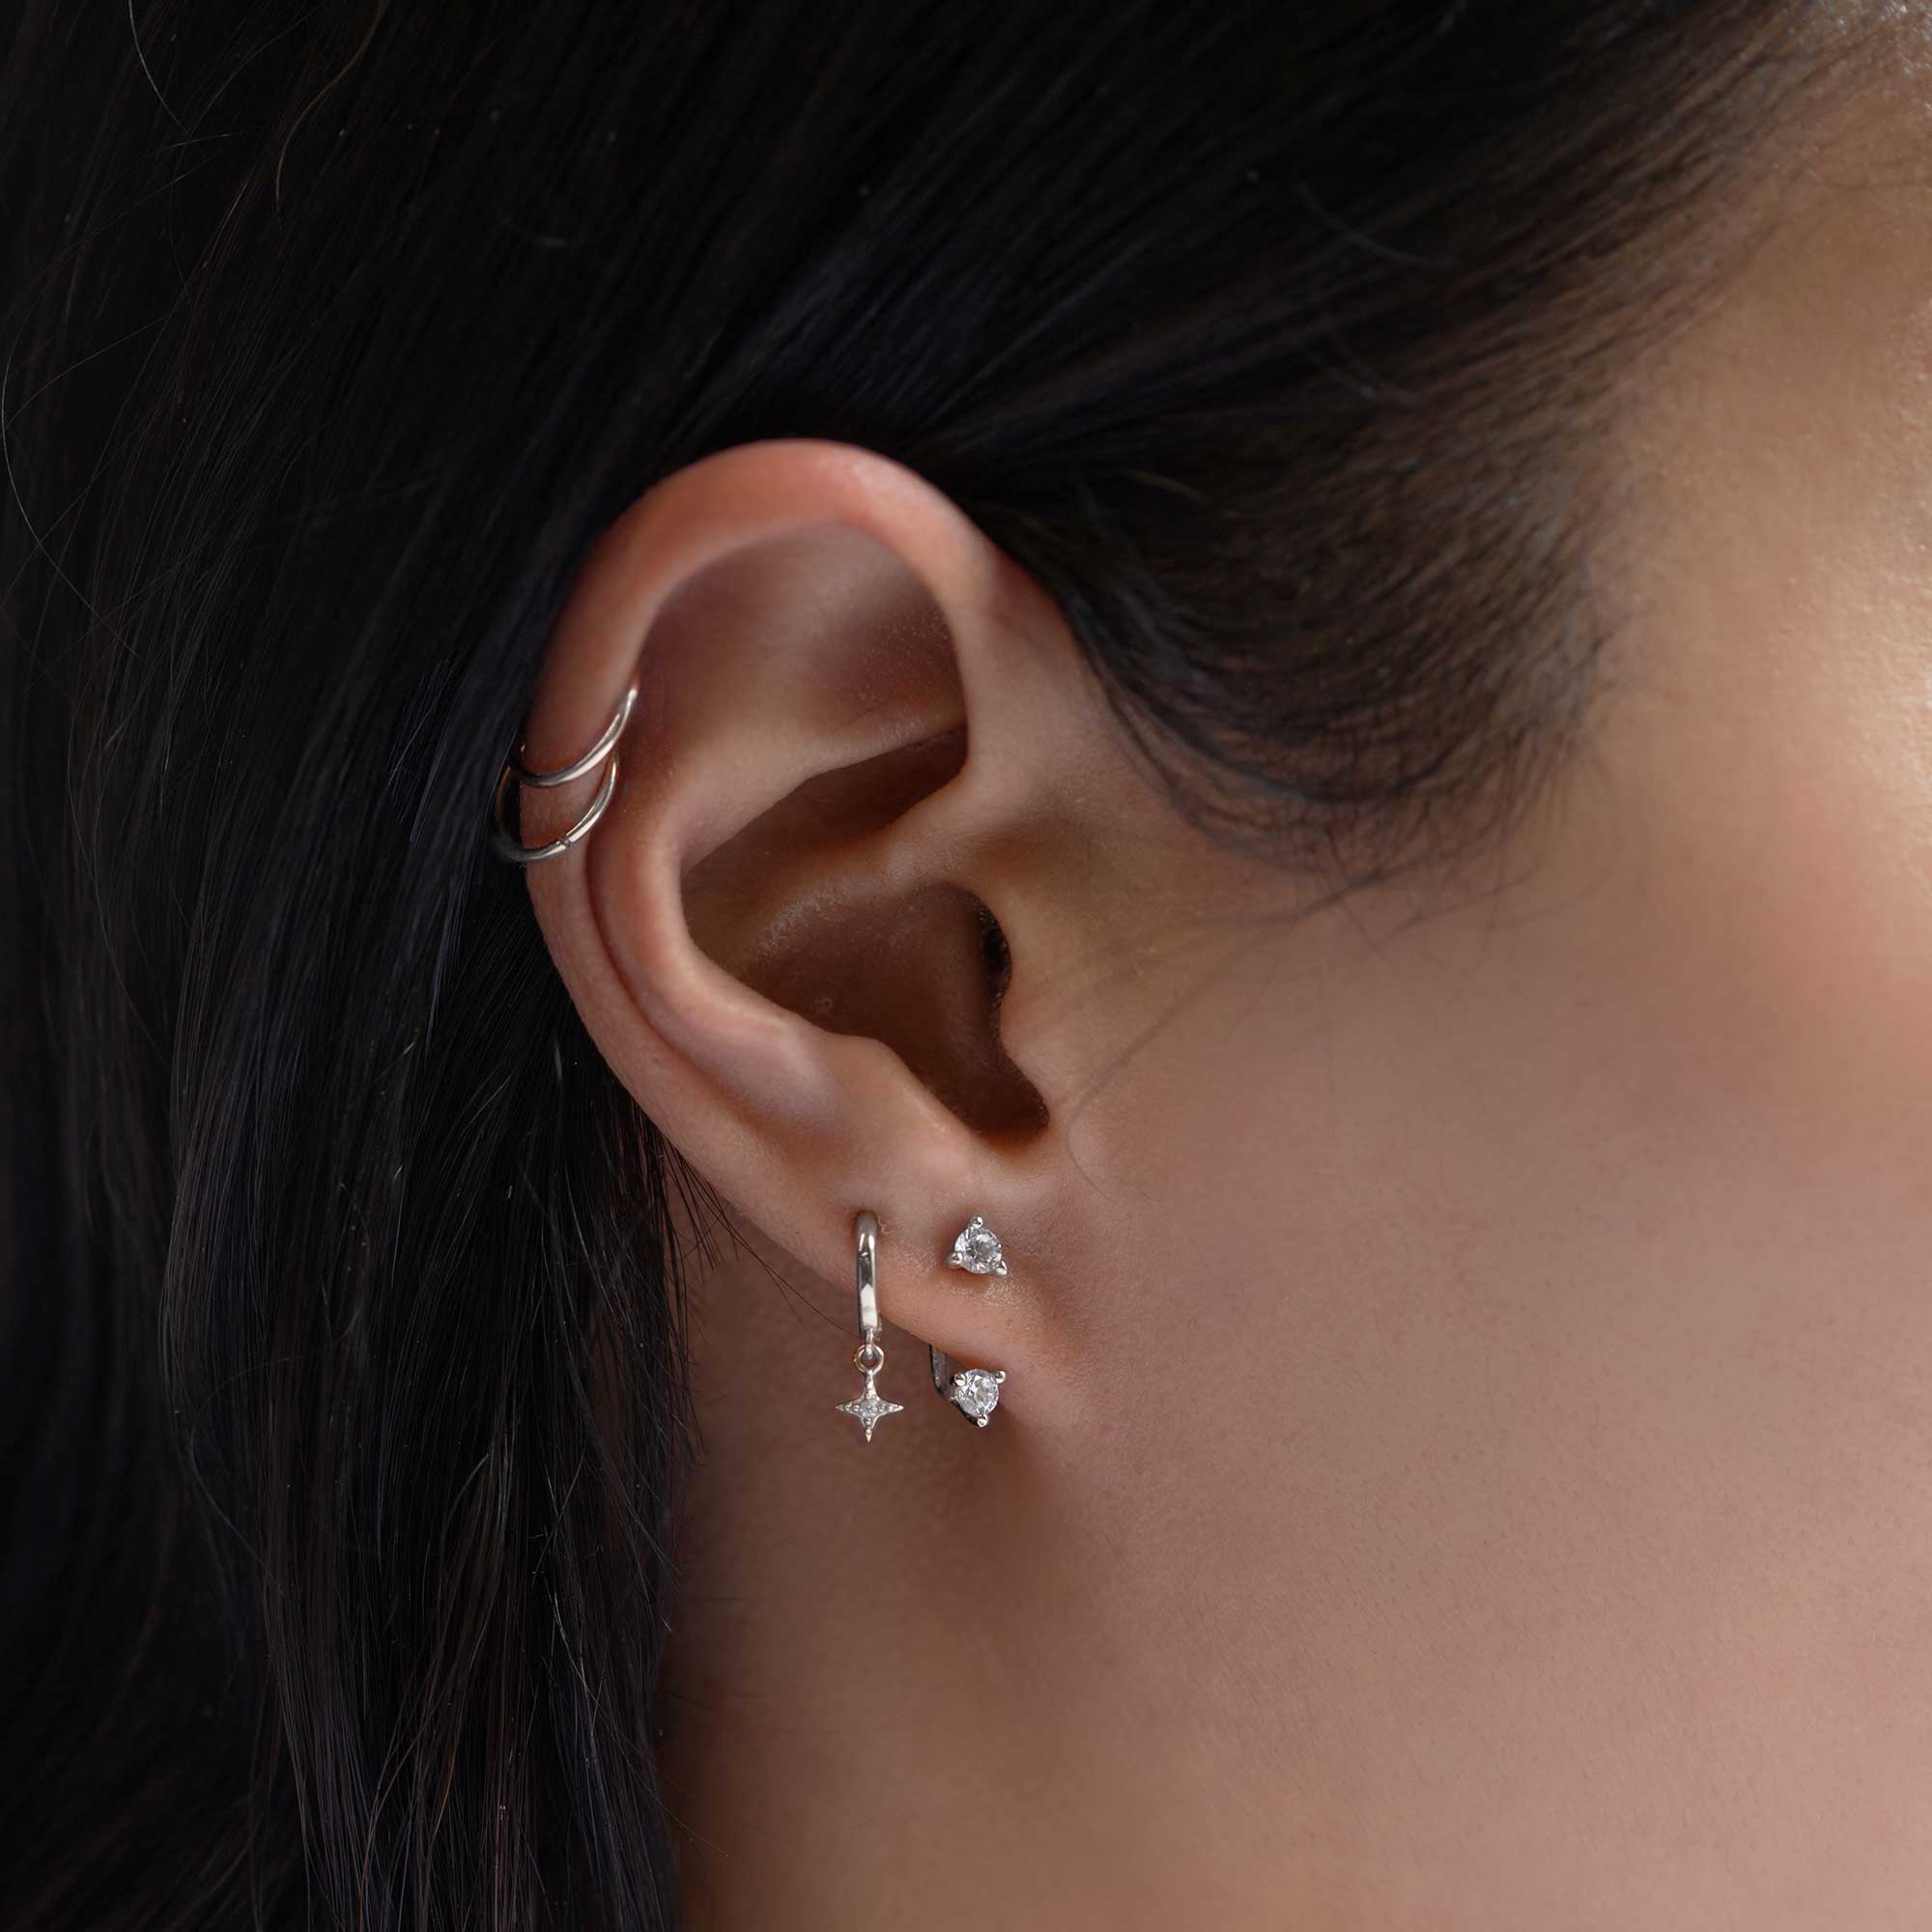 Earring Backs, Silver Extra Large Earring Backs Sterling Adjustable Earring Backs for Heavy Earrings Support (9mm,3 Pairs), Women's, Size: XL, Grey